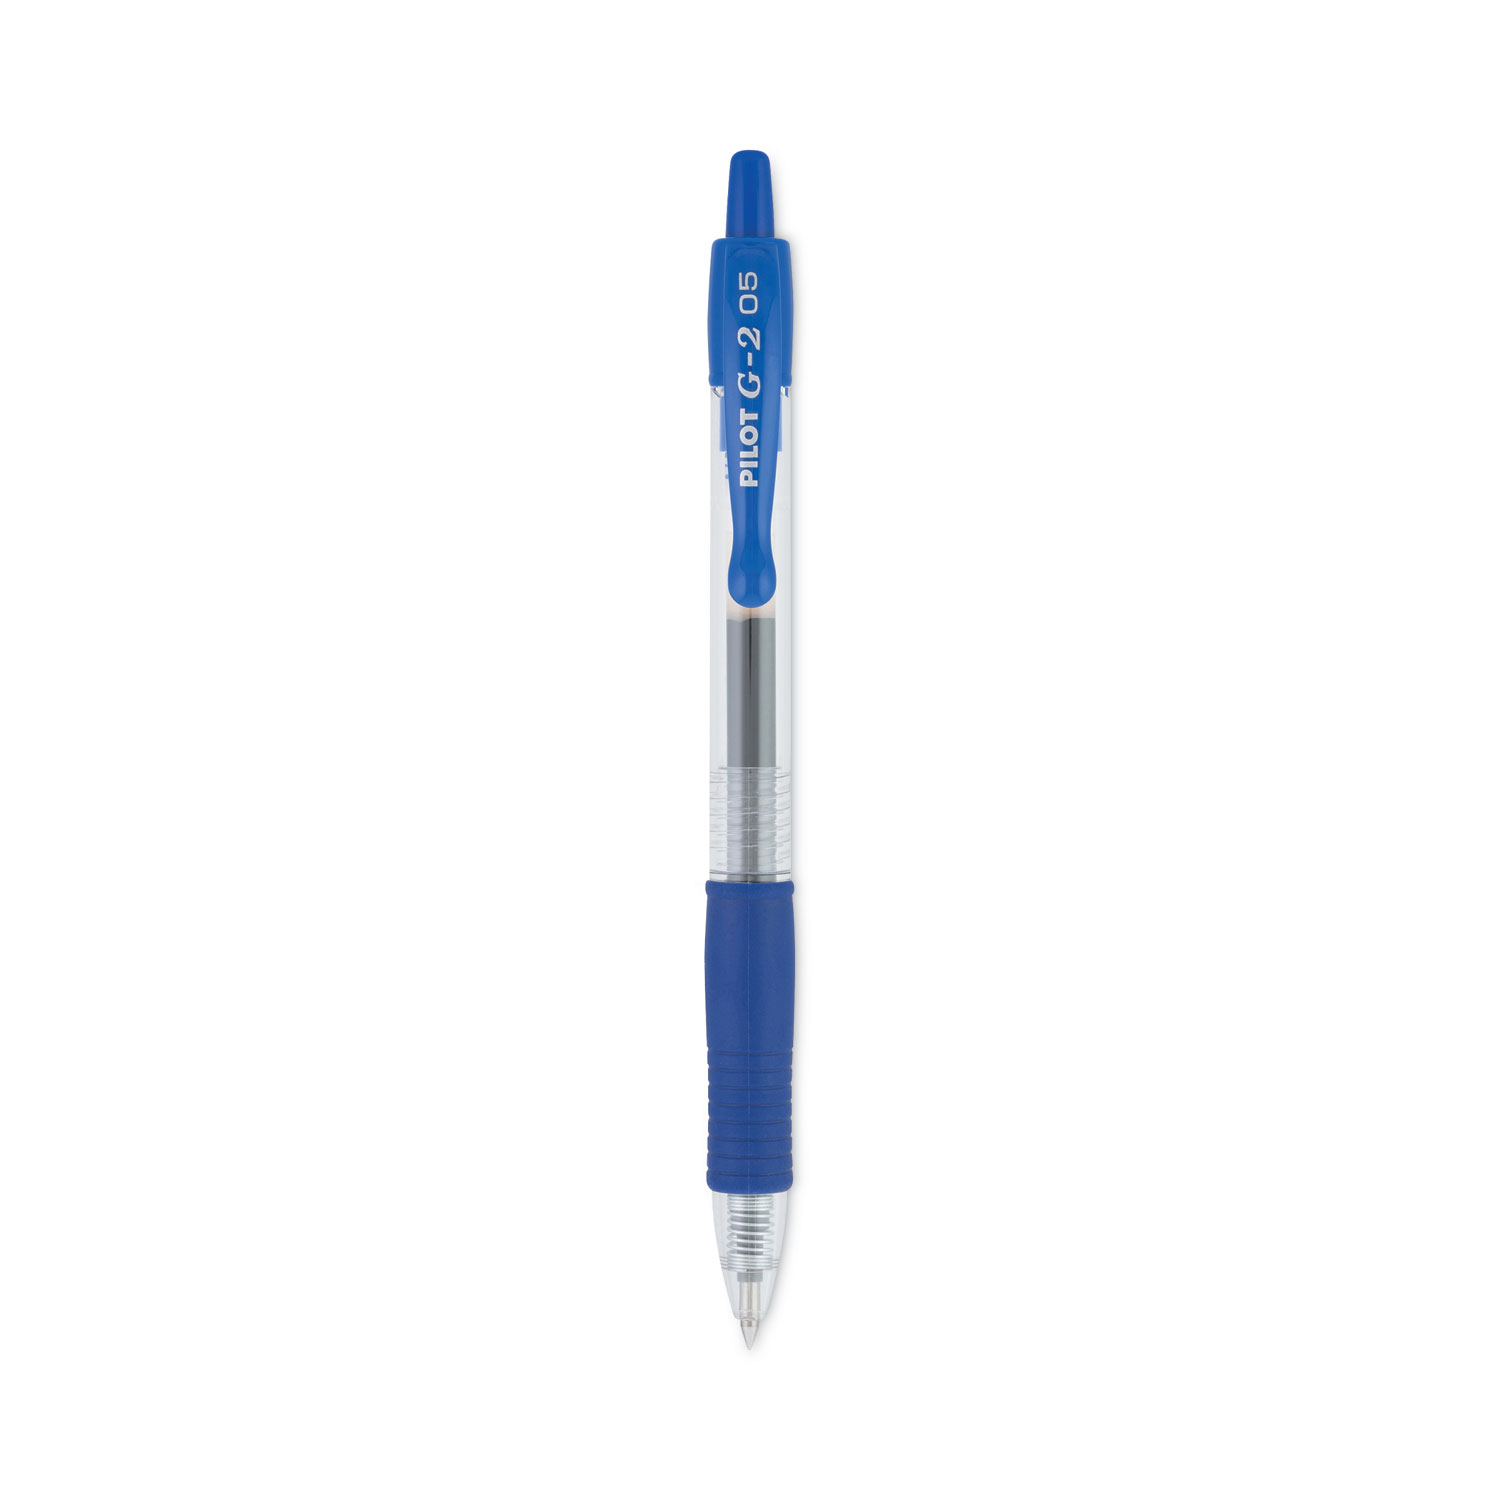 PILOT G2 Pens 0.5 mm - 10 Pack (5 Black and 5 Blue Pens) Premium